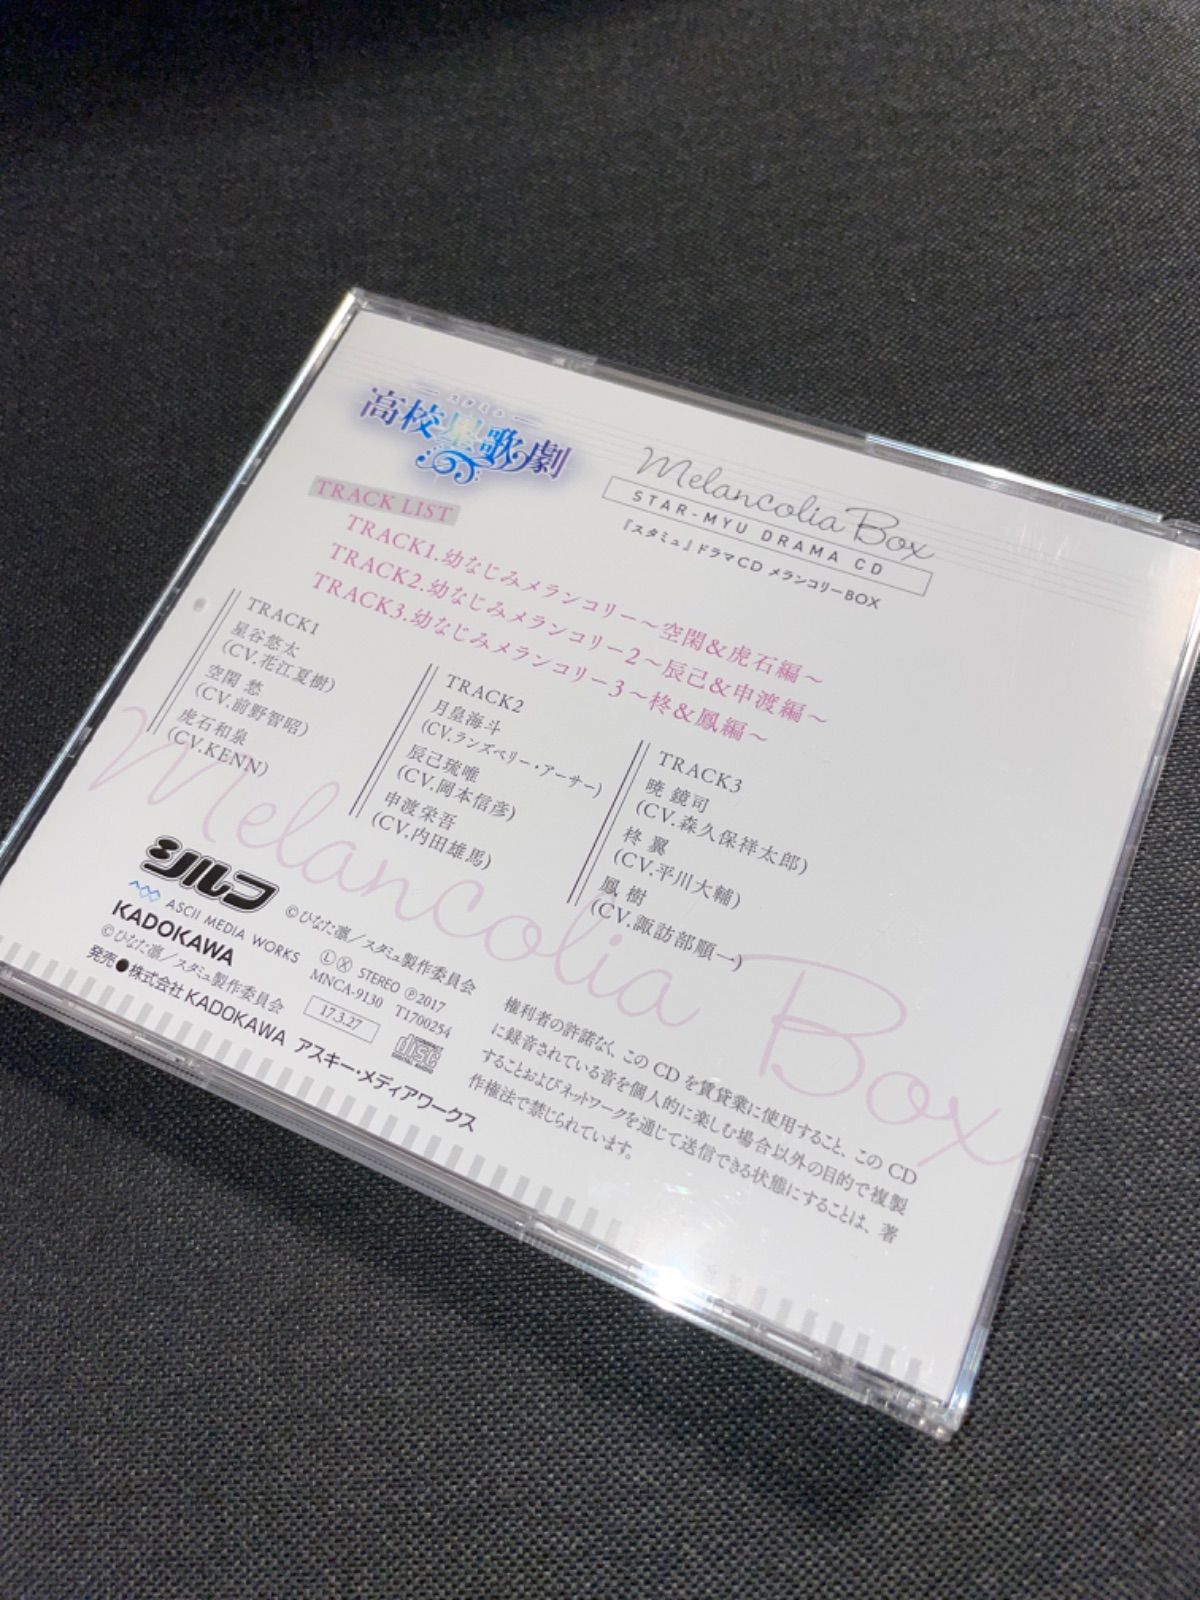 S1562) 高校星歌劇 スタミュ ドラマCD メランコリーBOX メランコリー